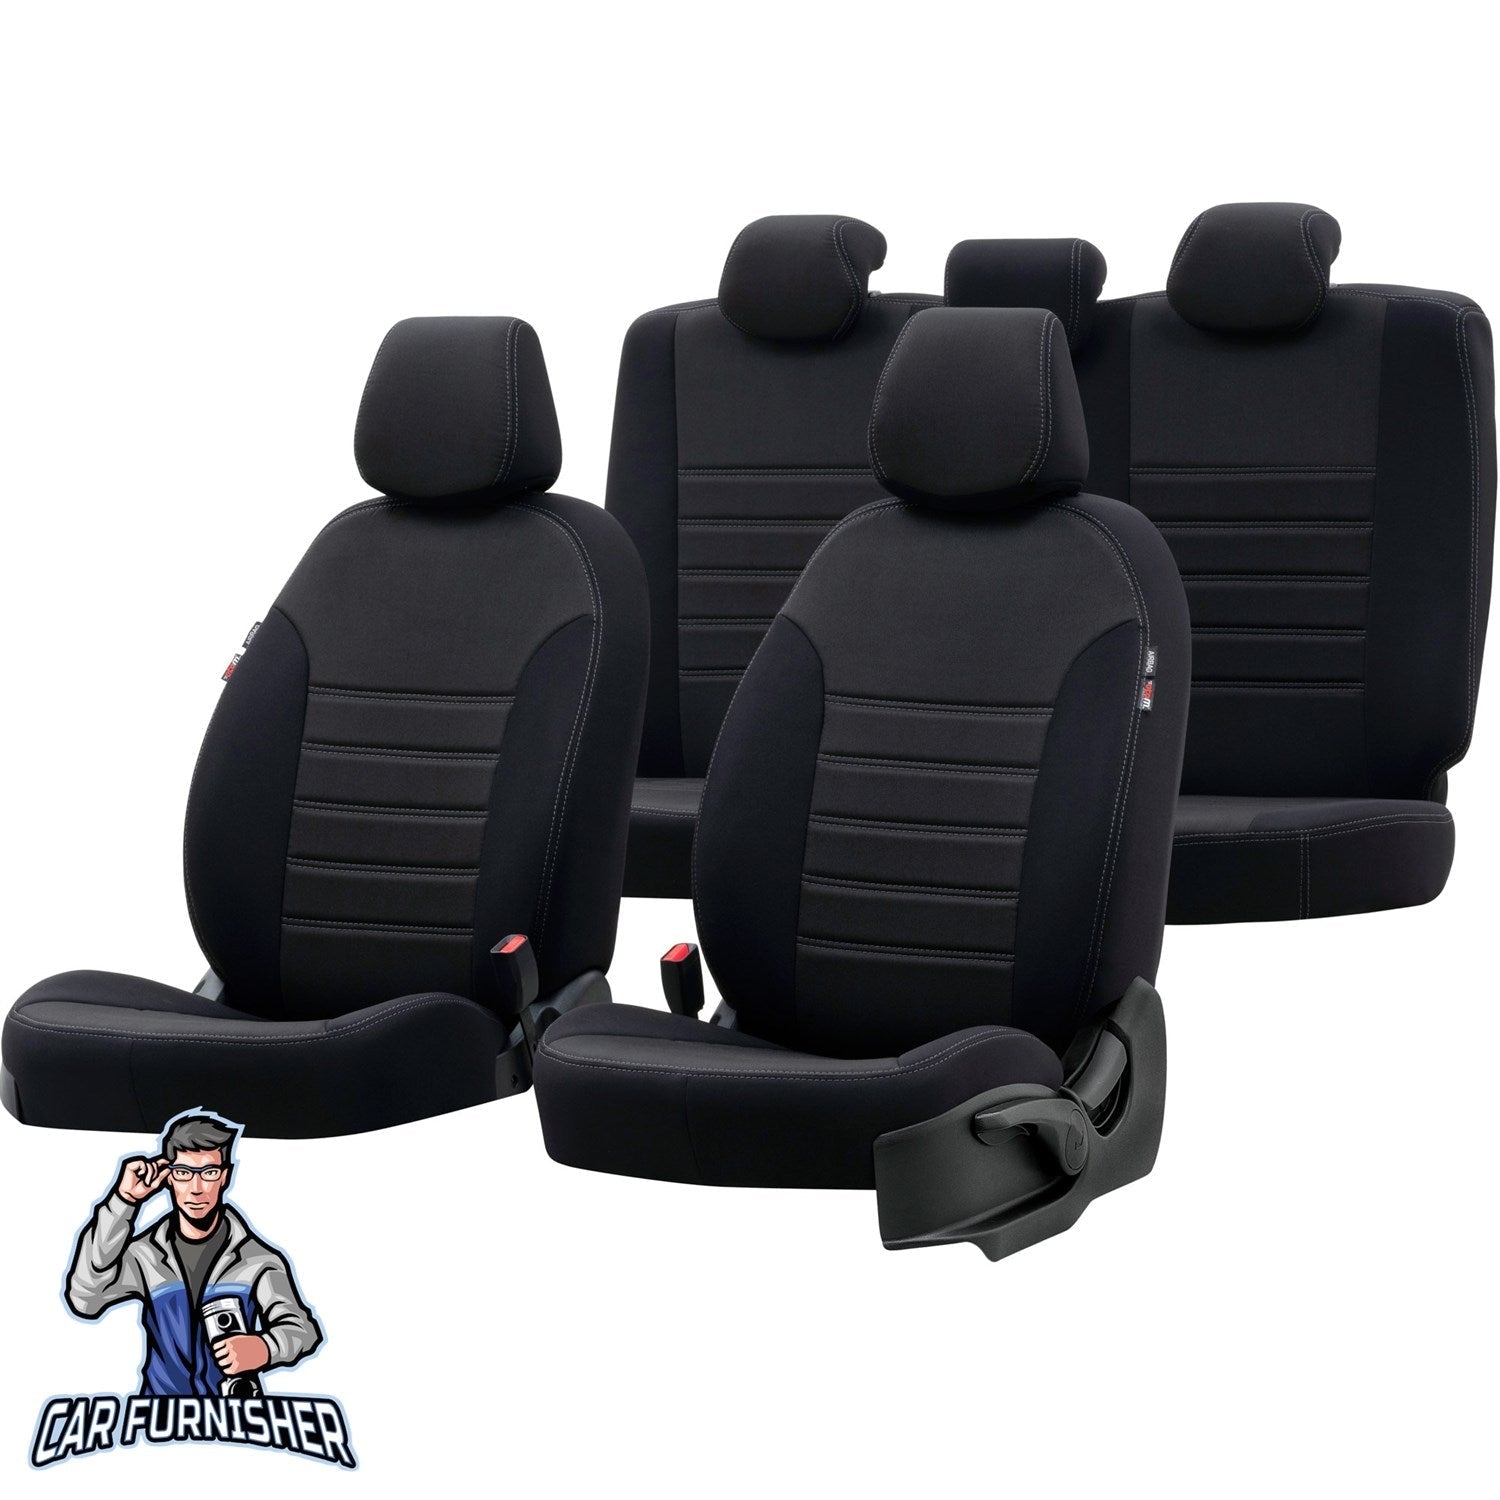 Chevrolet Captiva Car Seat Cover 2006-2011 LS/LT/LTX-Z Original Black Full Set (5 Seats + Handrest) Fabric